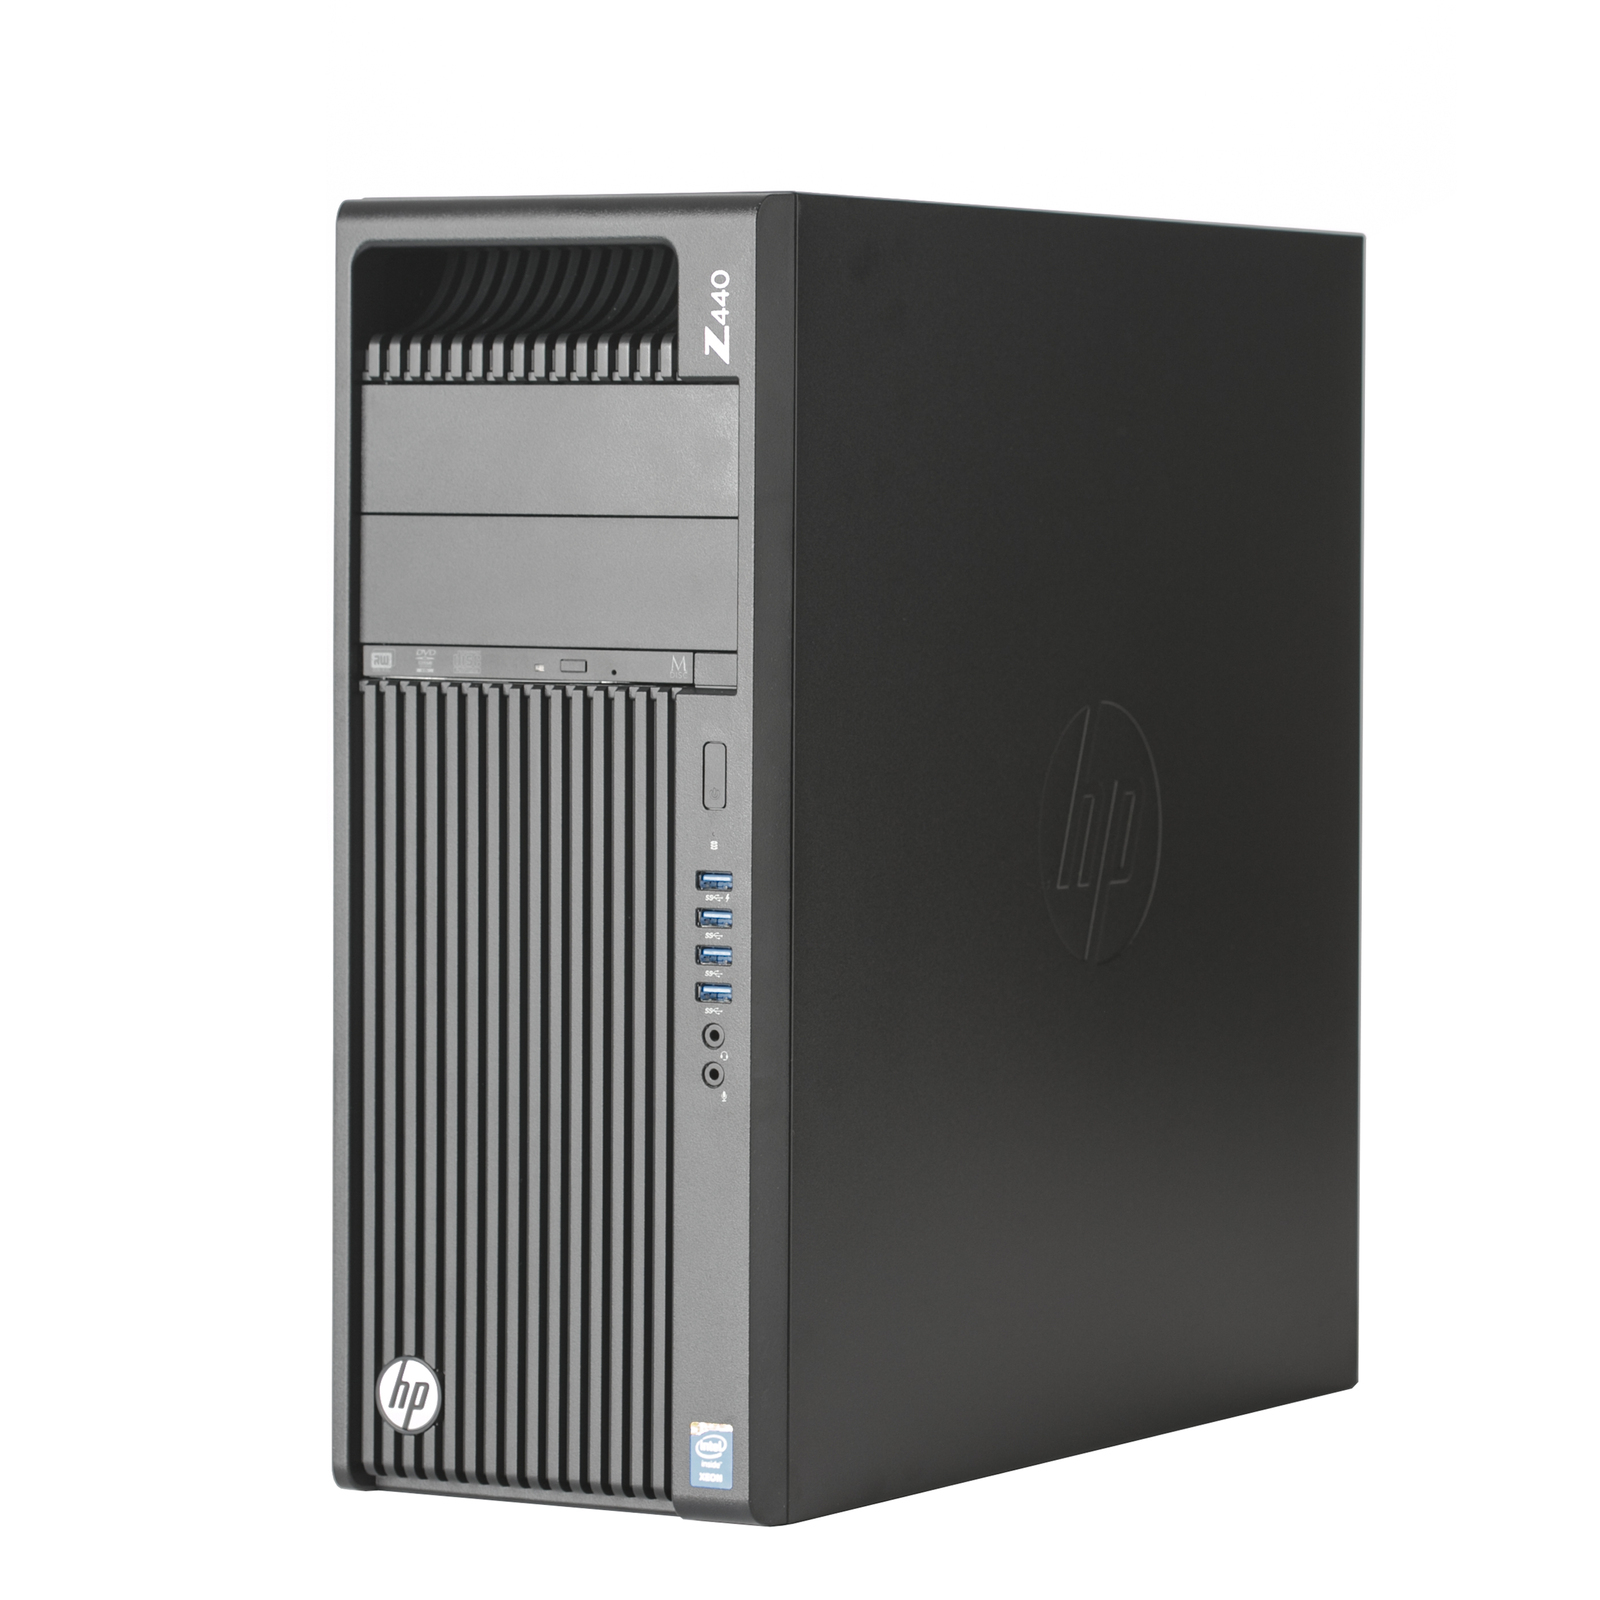 HP Z440 Tower Intel Xeon E5-1607 v4 3.10GHz 8GB RAM 500GB HDD Win 10 Image 2